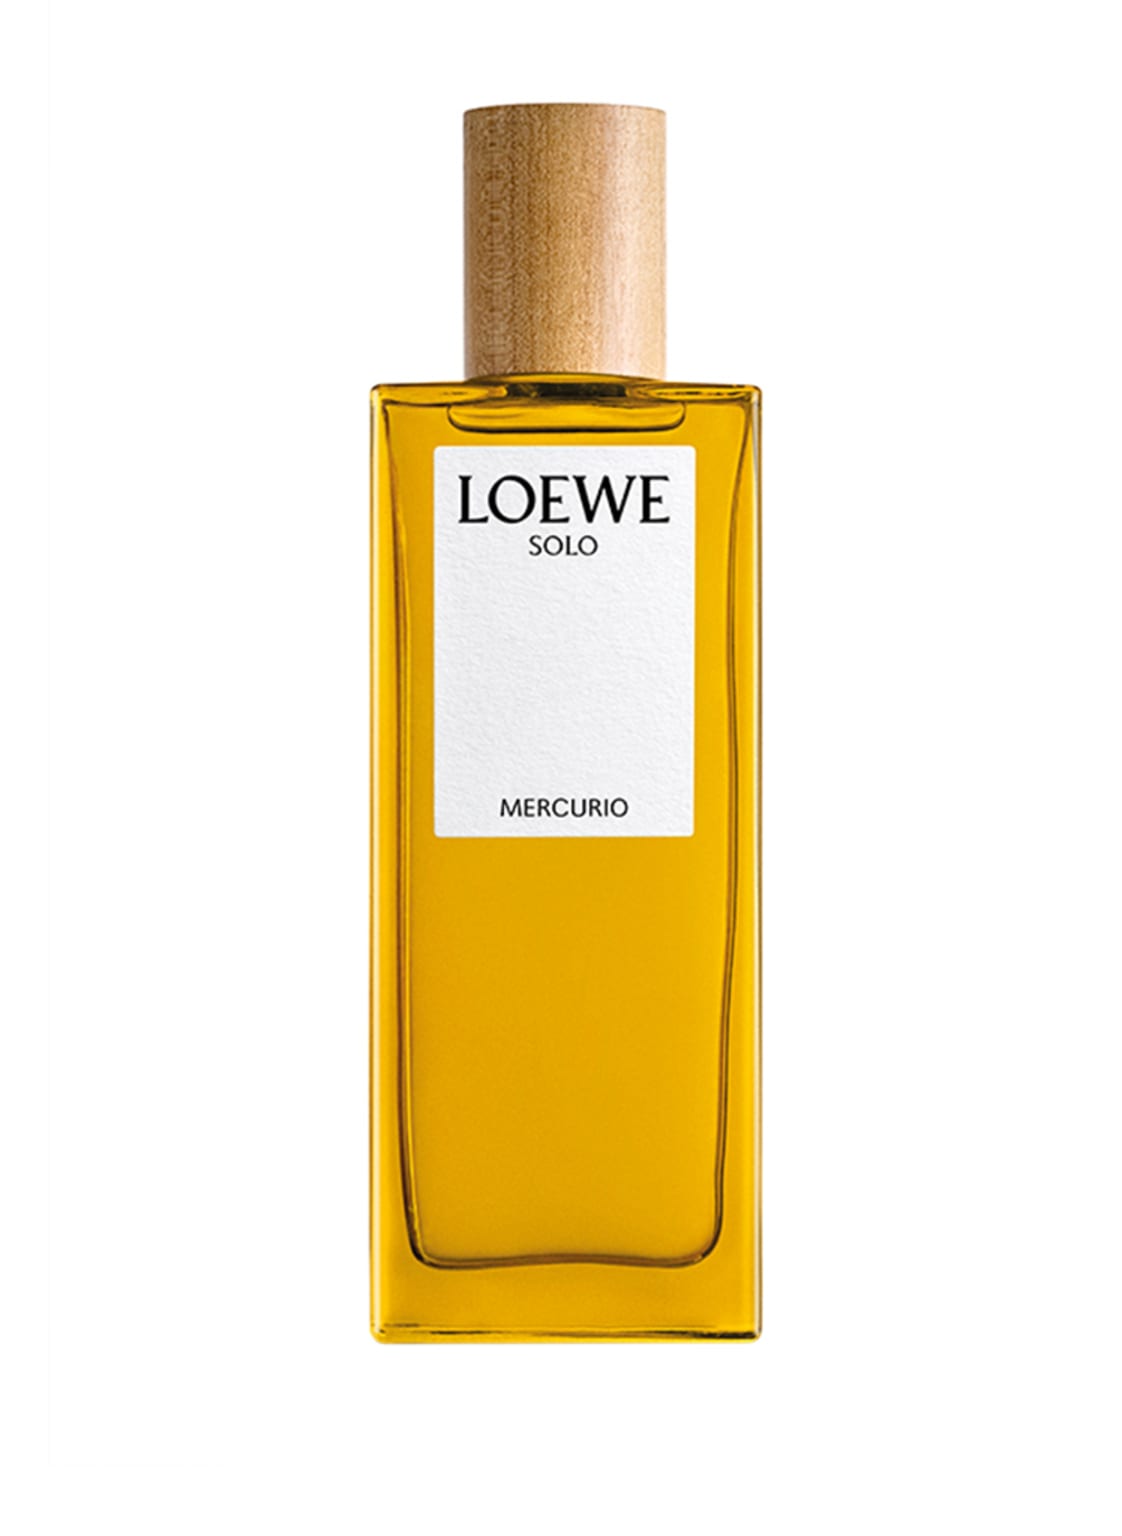 Loewe Solo Mercurio Eau de Parfum 50 ml von Loewe